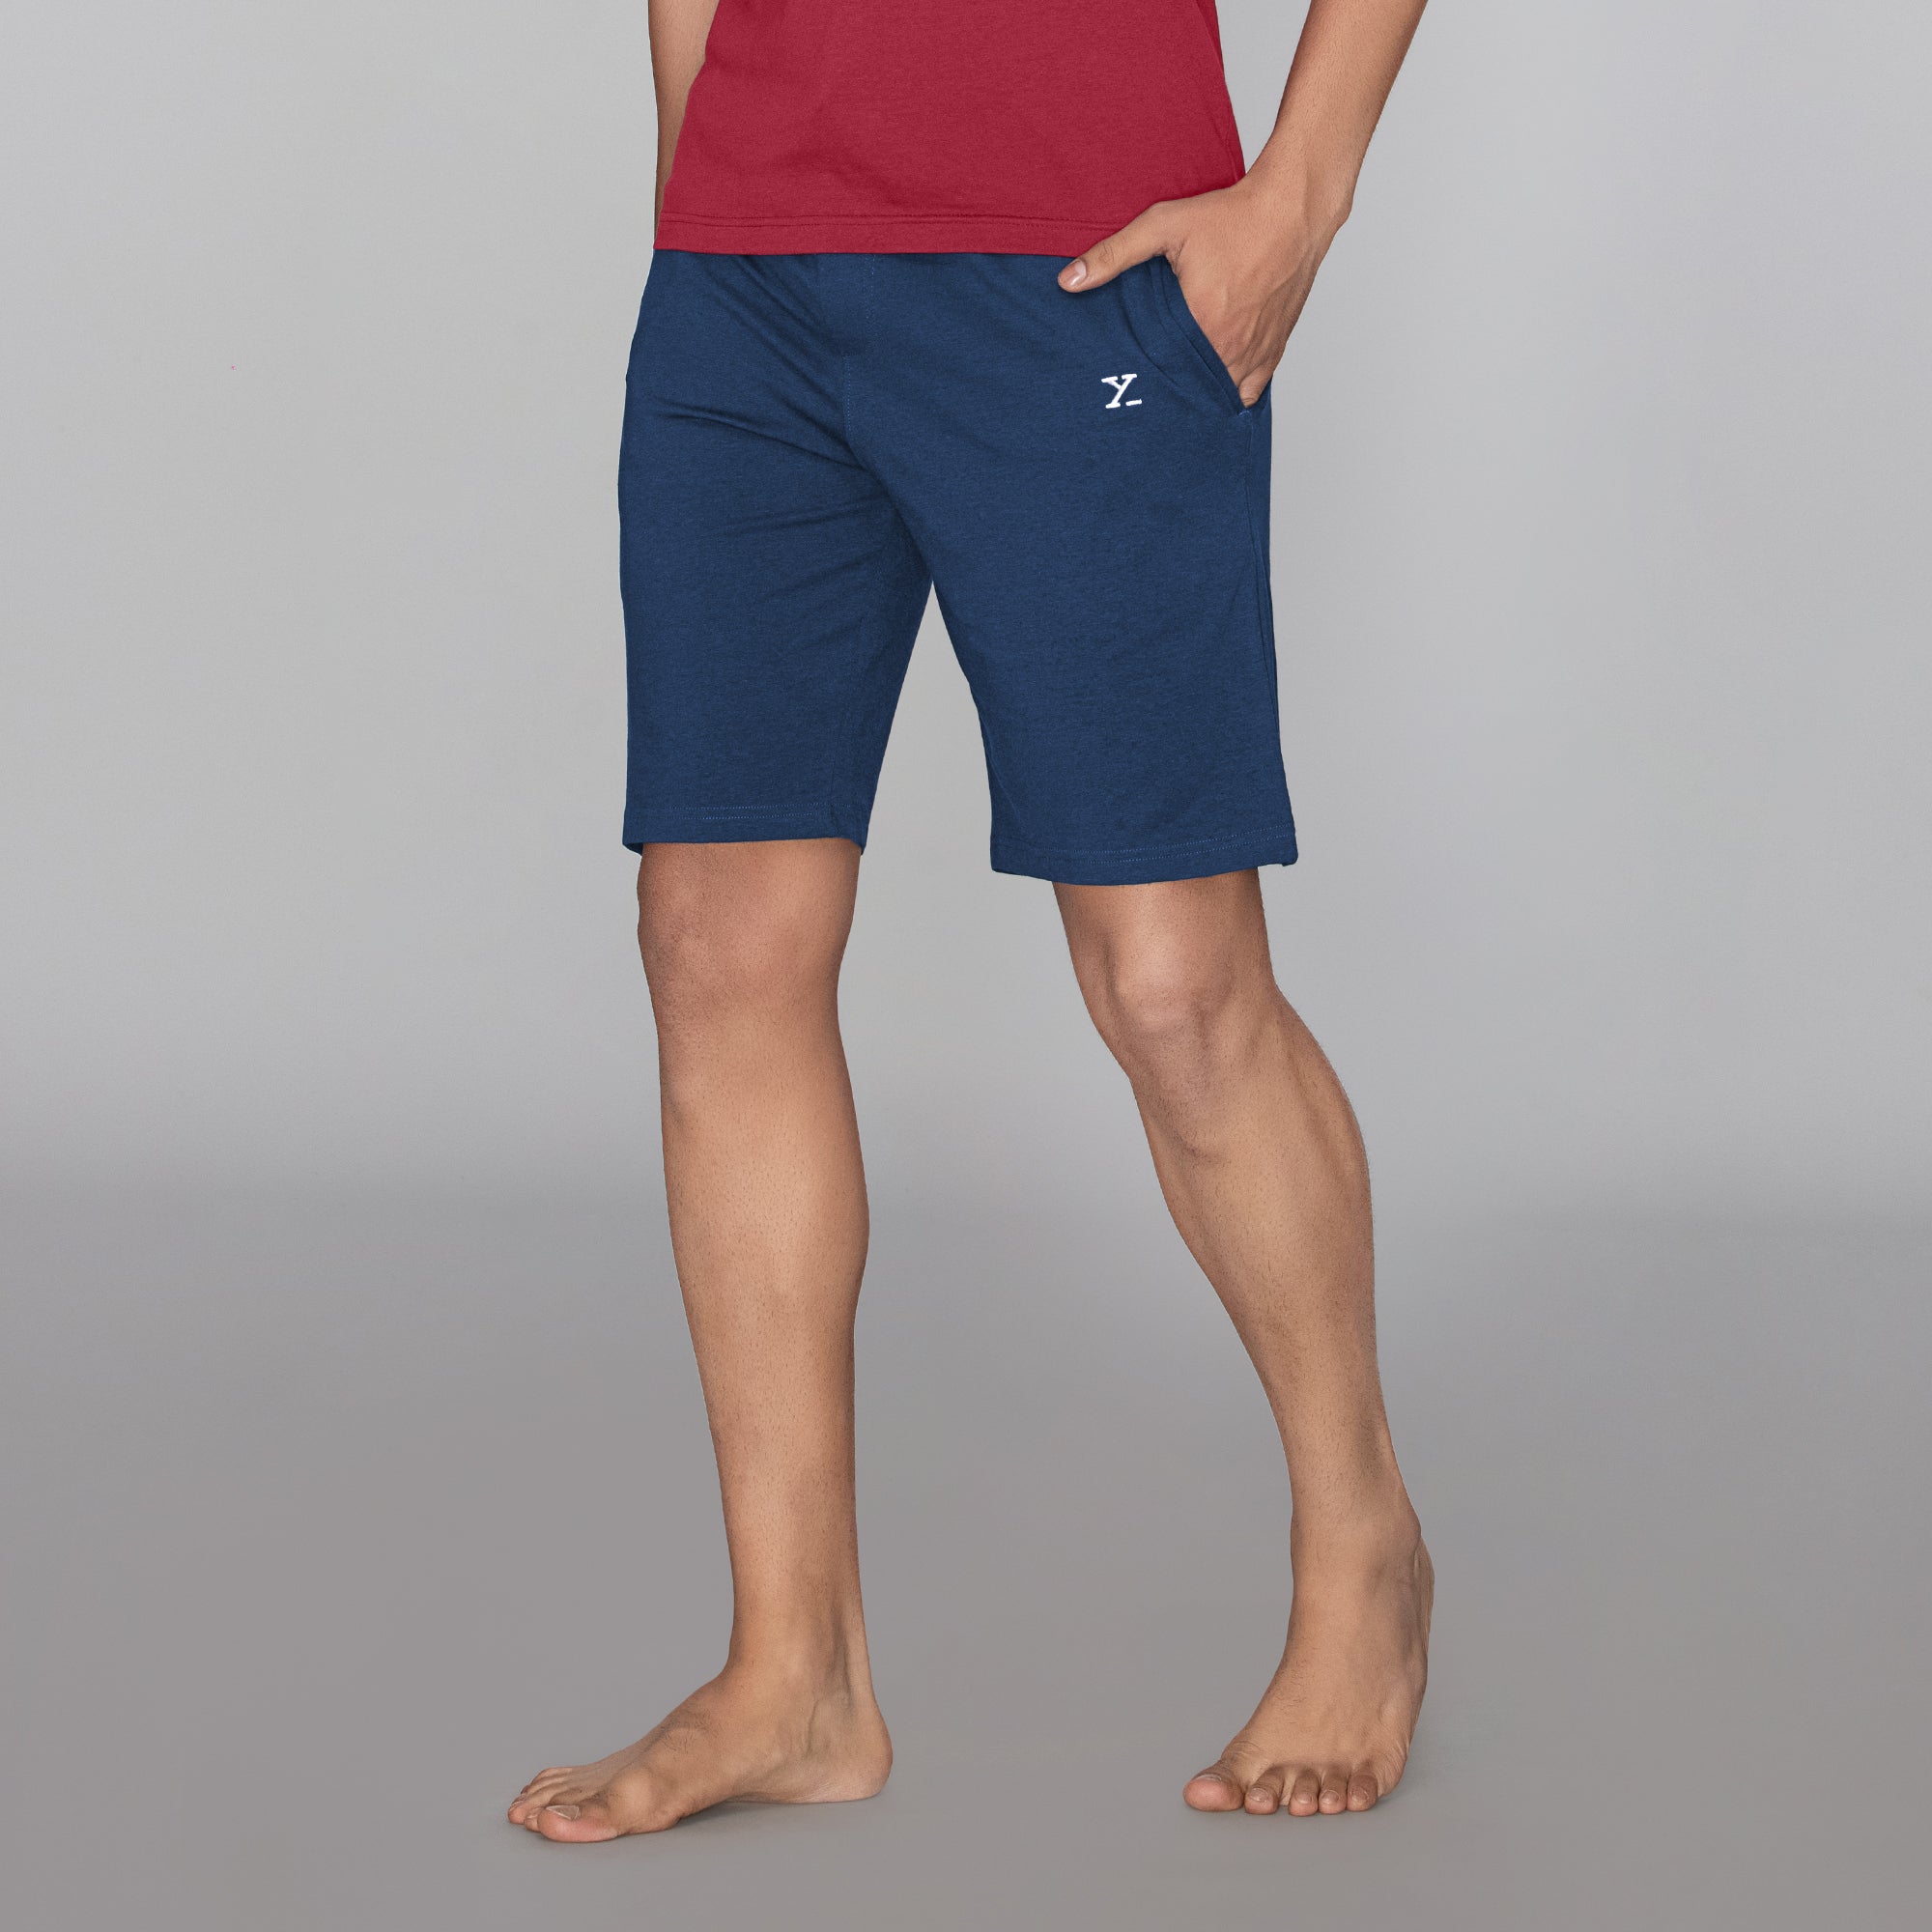 XYXX Men's Cotton Modal Solid ACE Lounge Shorts